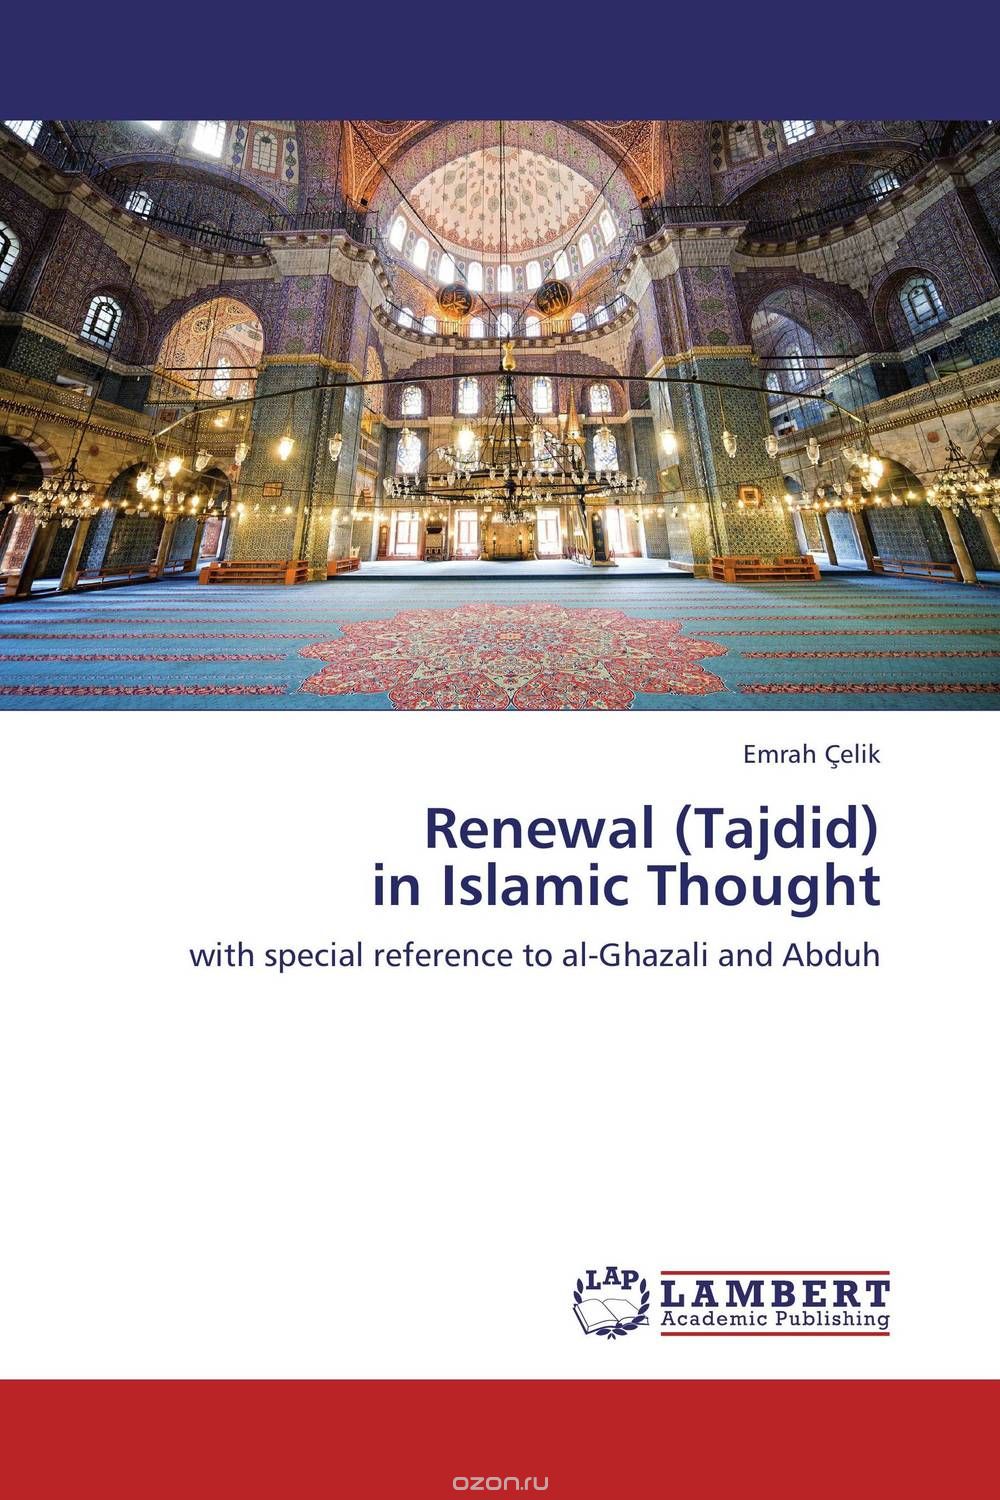 Скачать книгу "Renewal (Tajdid)  in Islamic Thought"